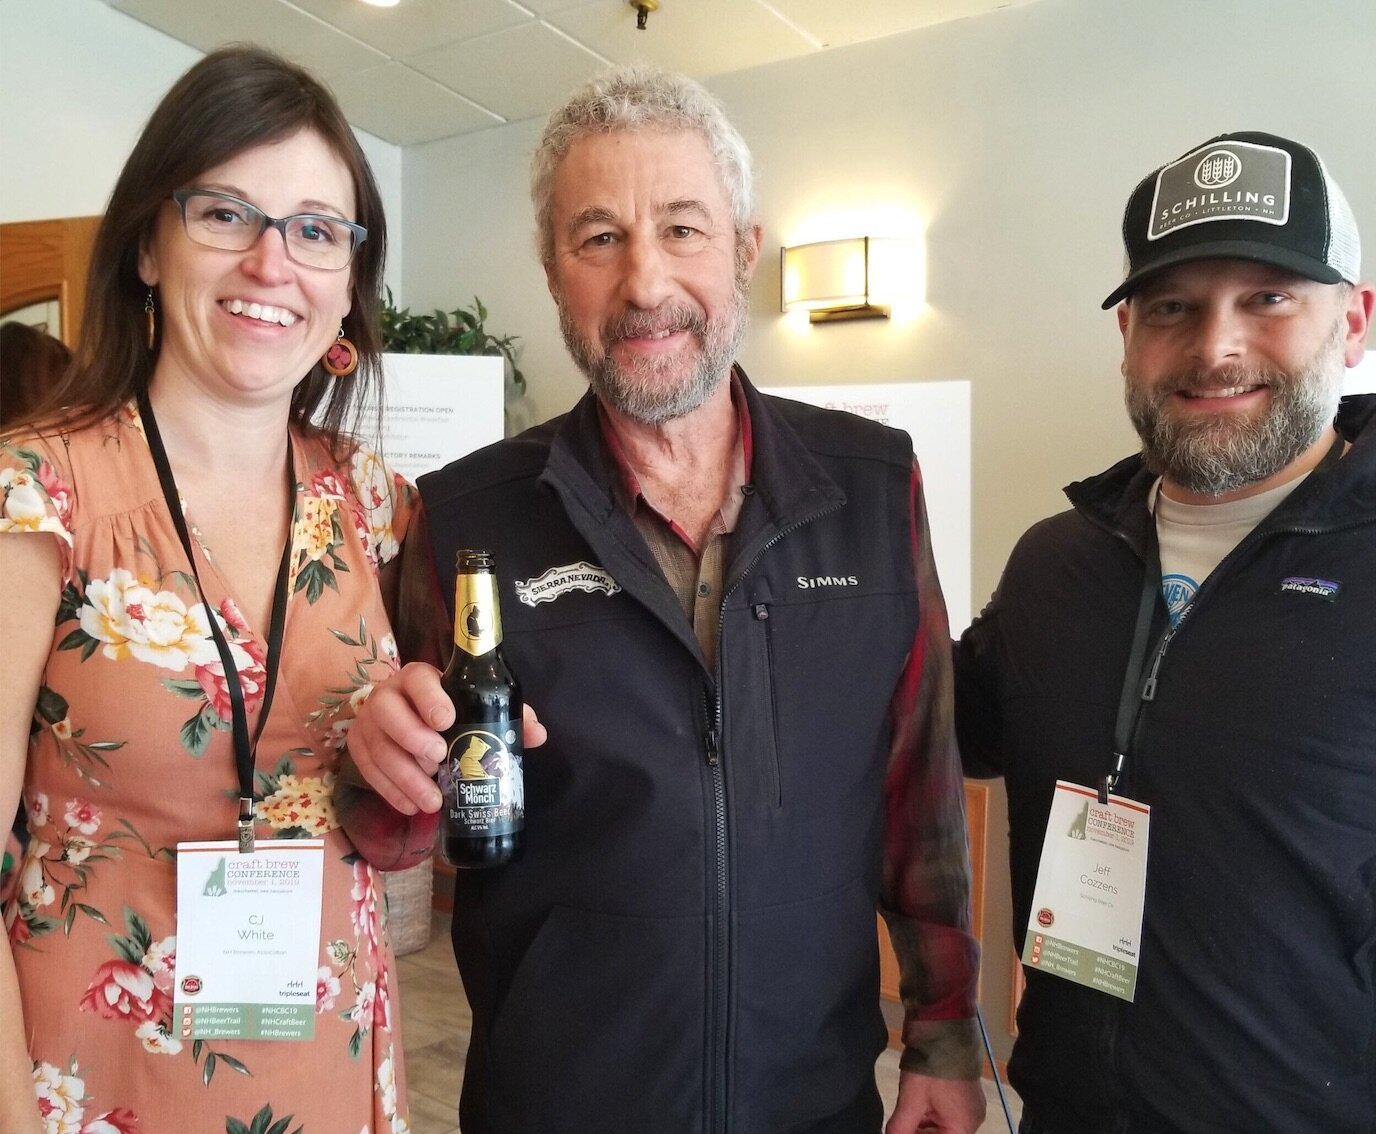 Ken Grossman of Sierra Nevada Brewing Company - meets the Mönch